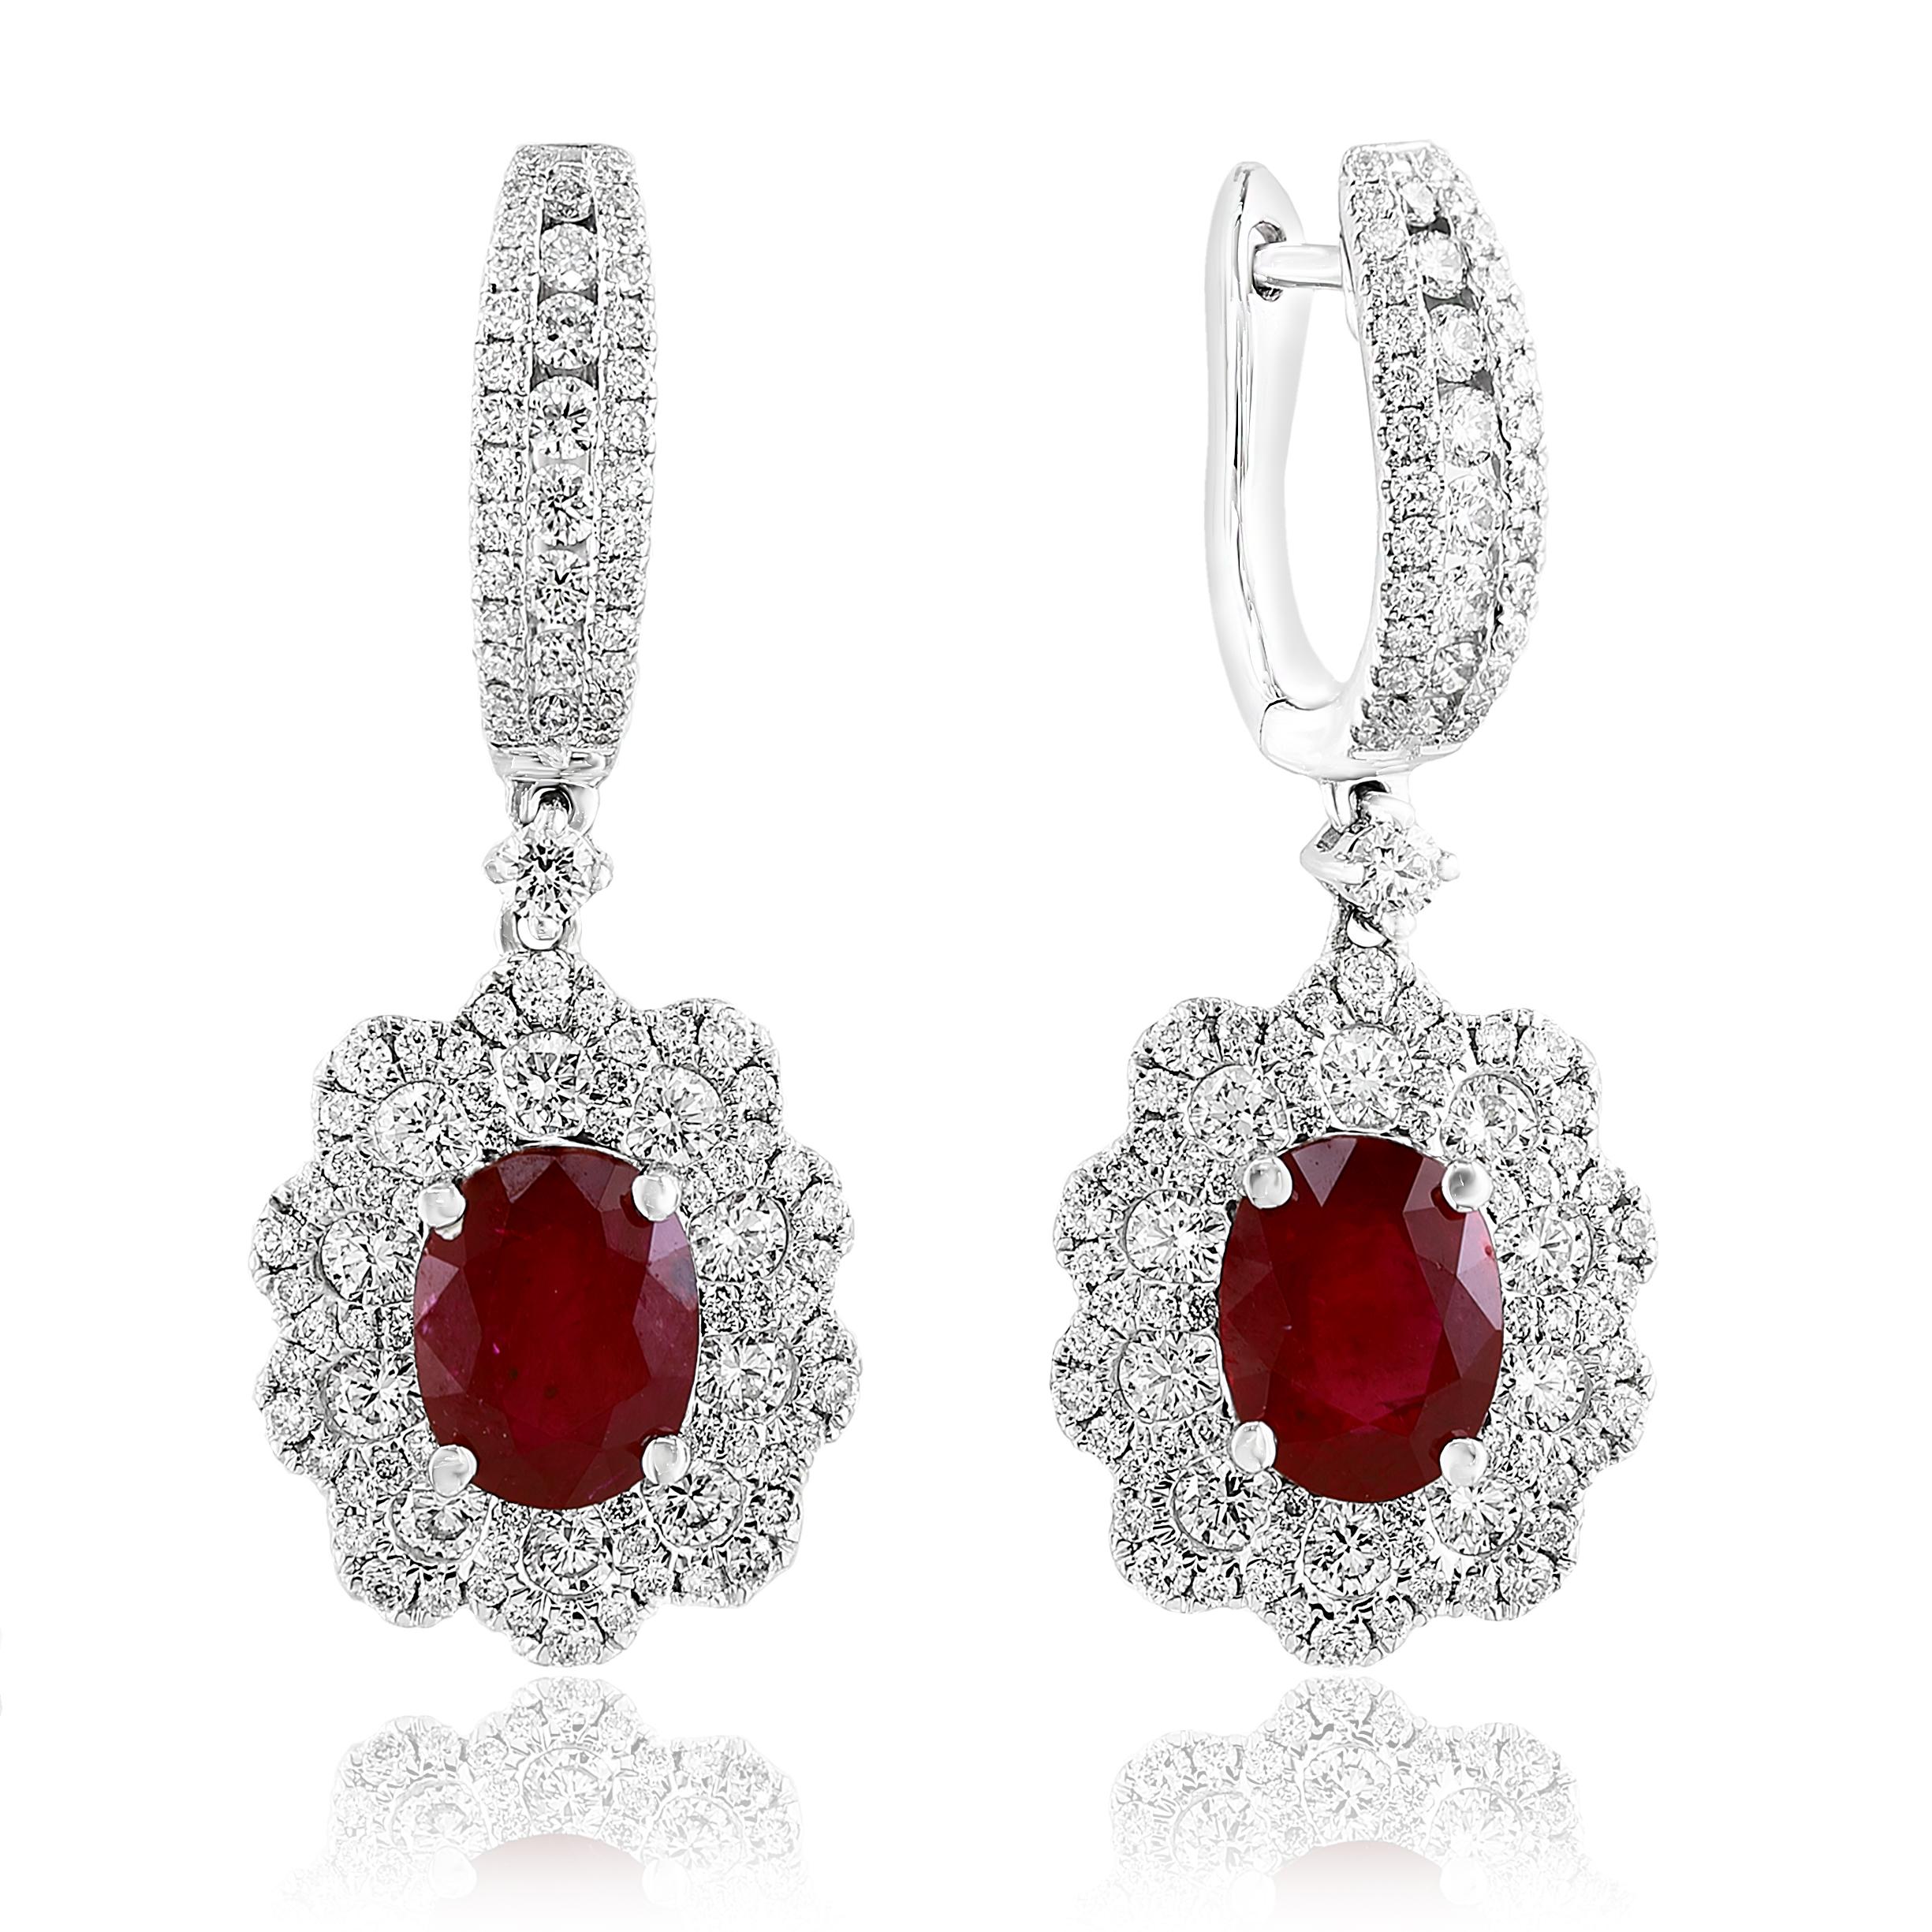 Modern 2.86 Carat Oval Cut Ruby and Diamond Drop Flower Earrings in 18K White Gold For Sale